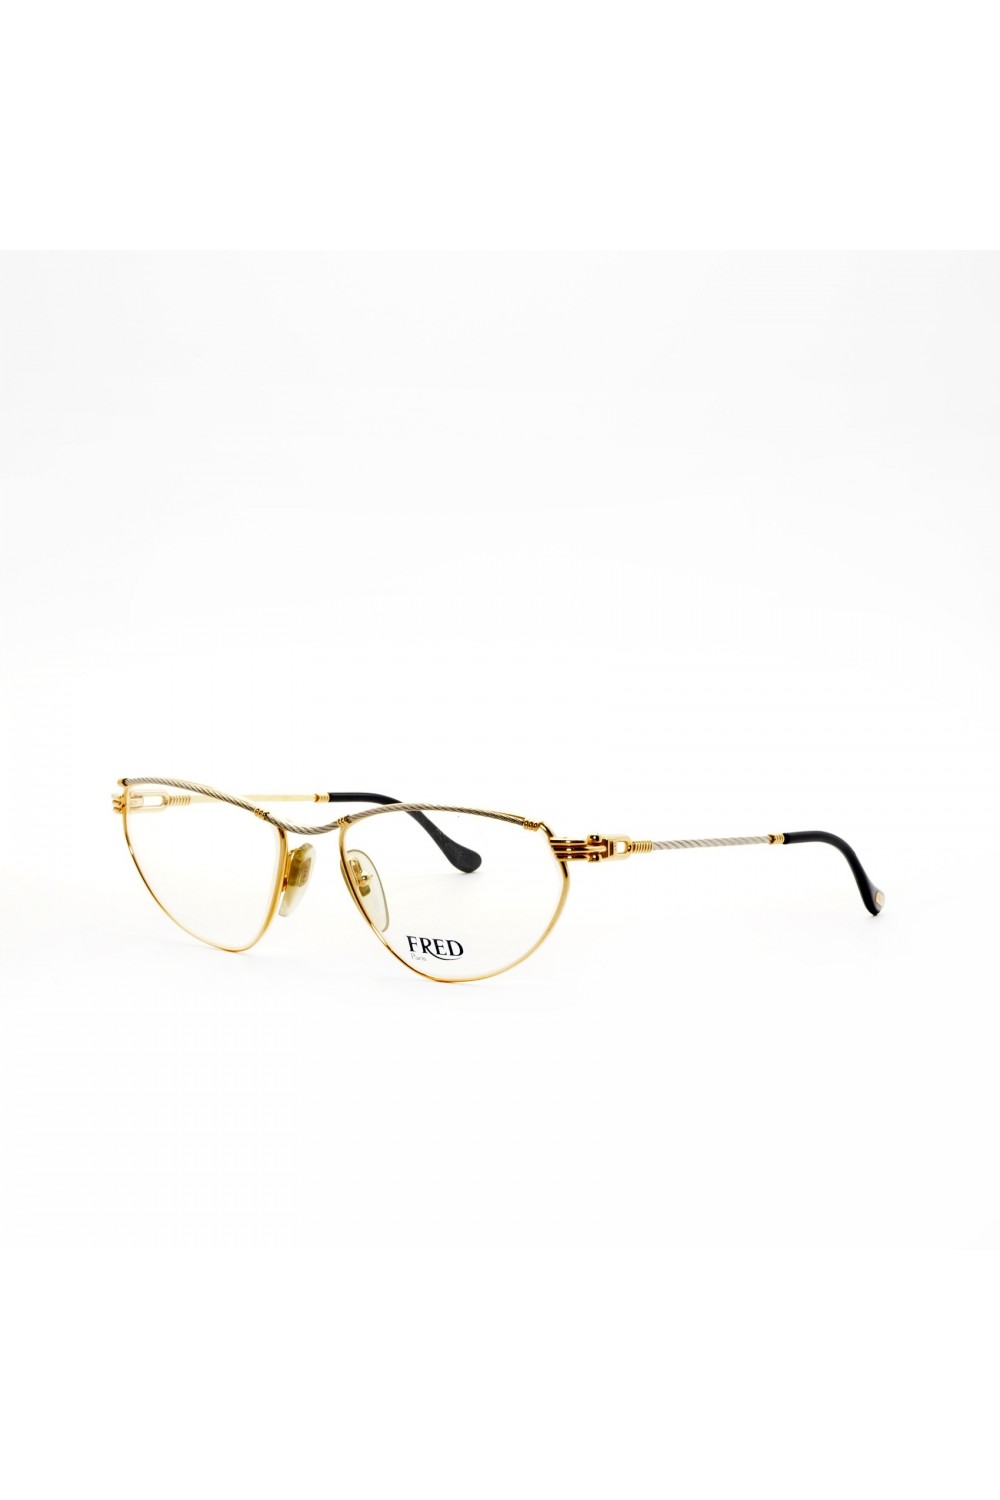 Fred - Occhiali da vista vintage in metallo cat eye per donna oro - MISS G5